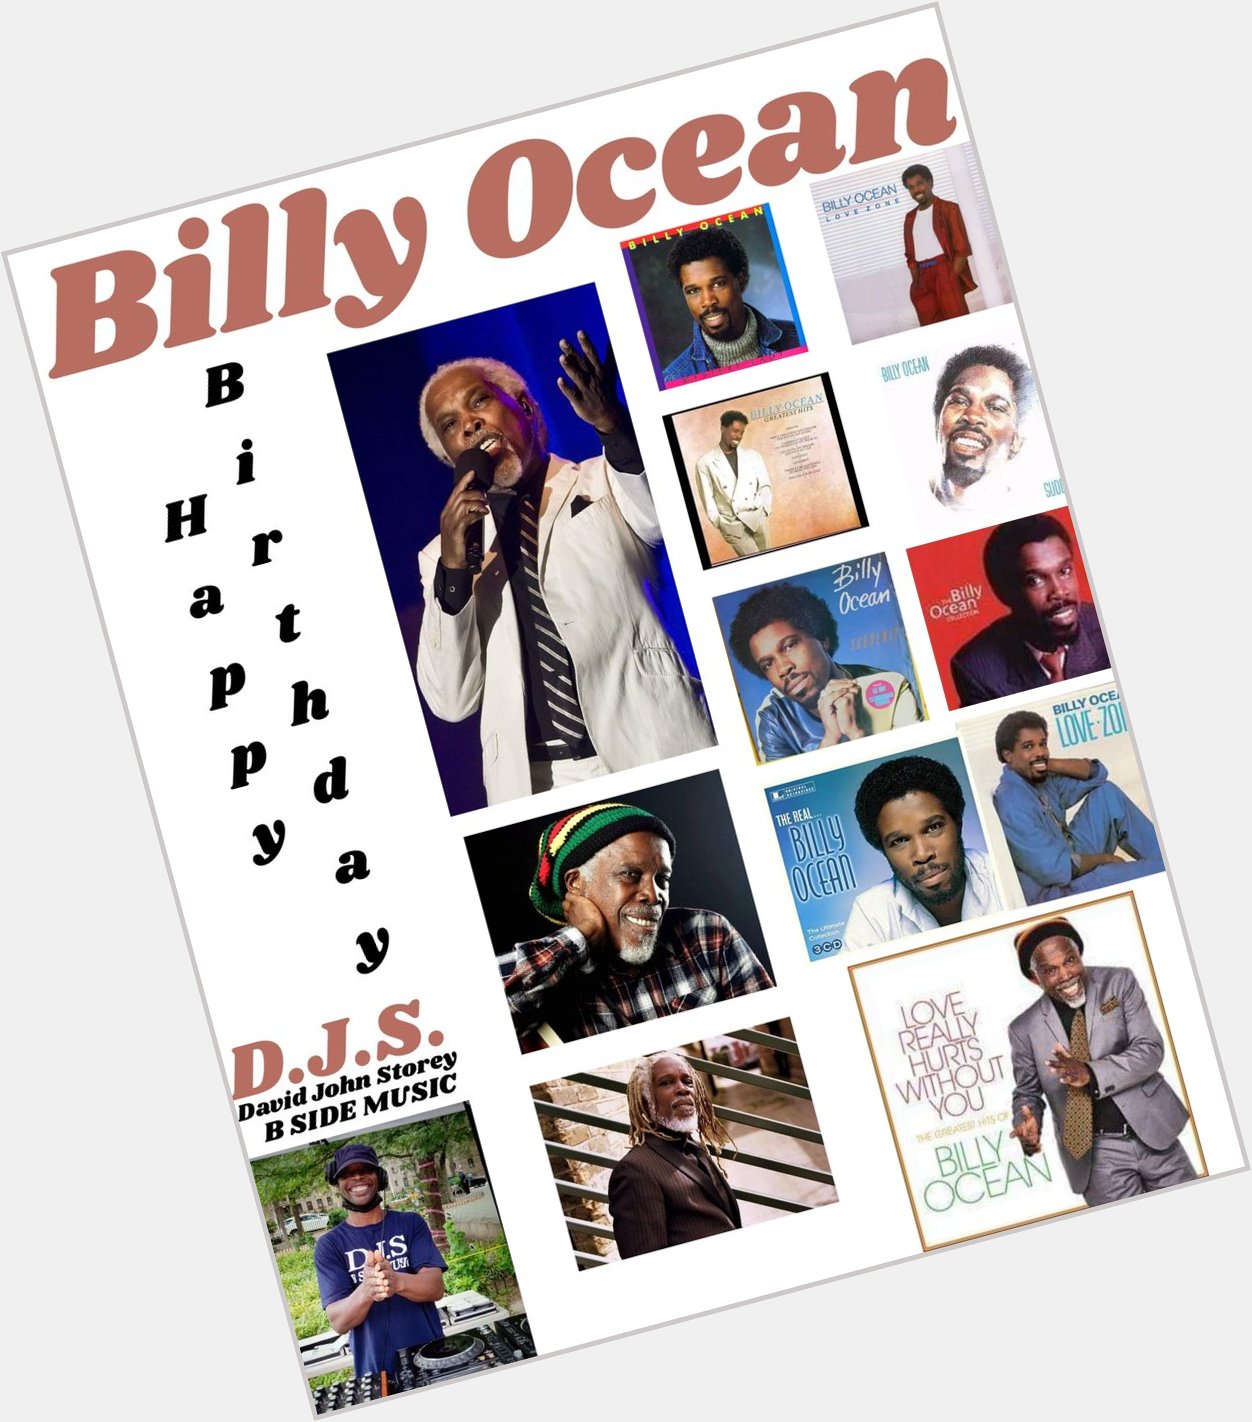 I(zD.J.S.) saying Happy Birthday to Singer: \"BILLY OCEAN\". 